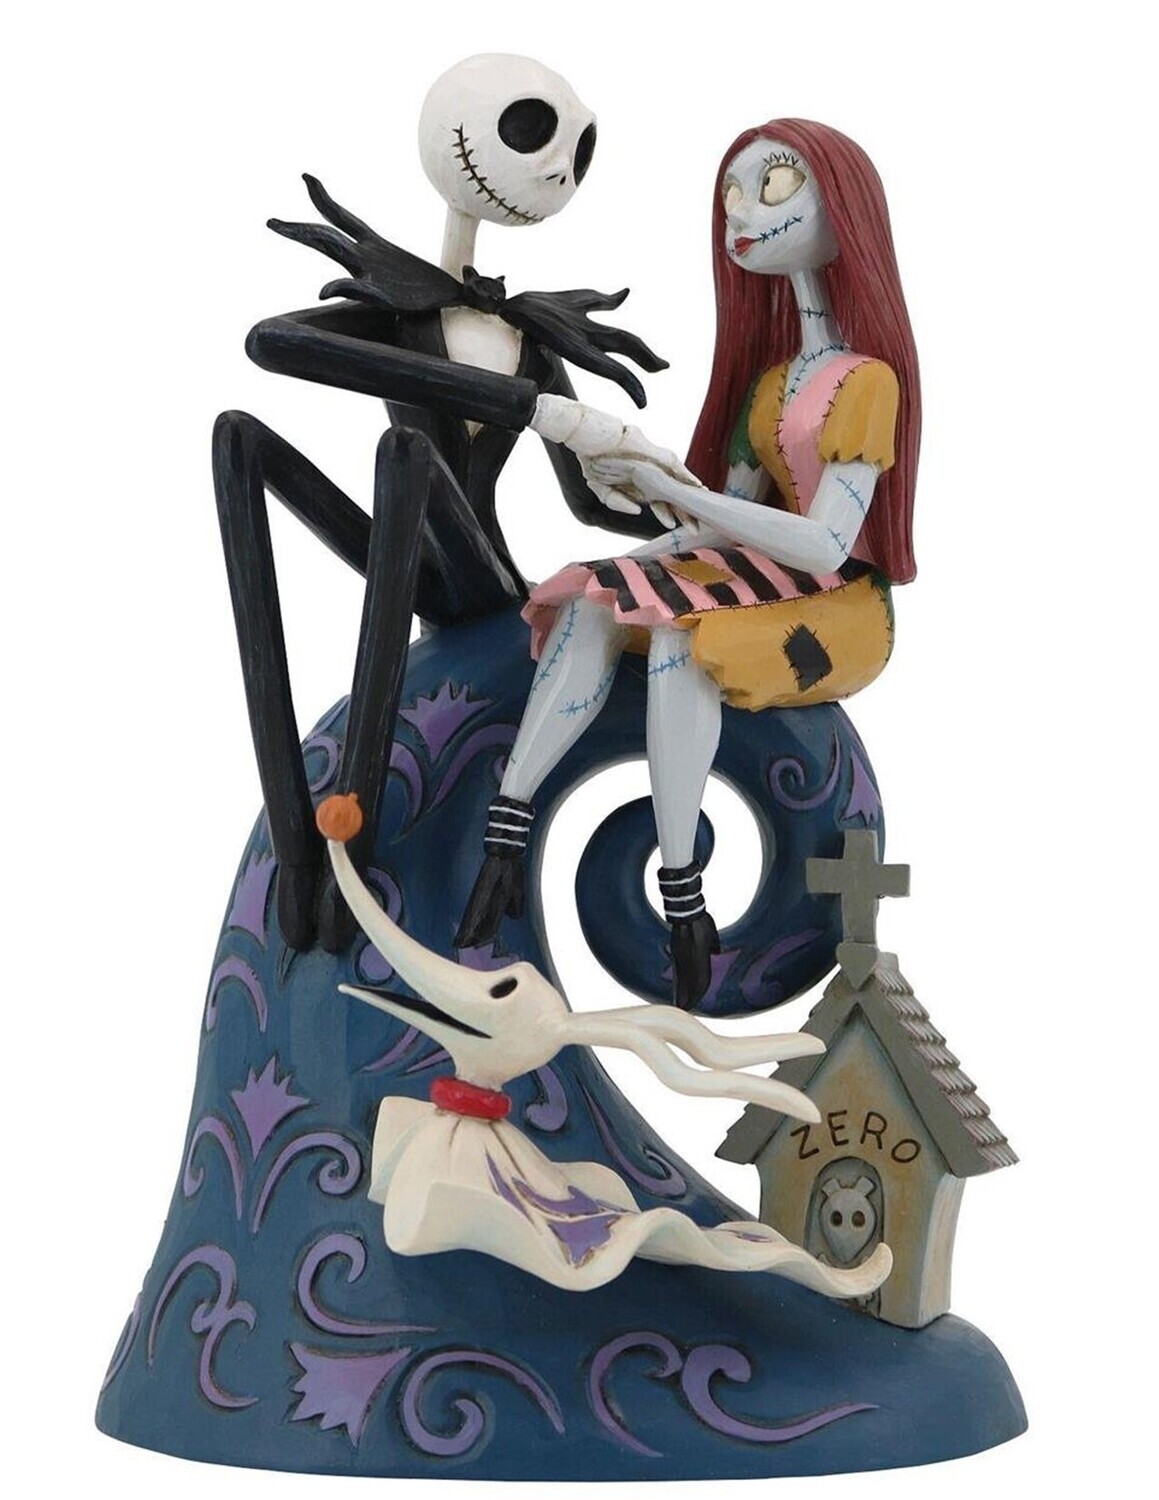 Jim Shore Disney Traditions Nightmare Before Christmas "Jack, Sally & Zero on Hill - Spiral Hill Romance" Figurine (6013054)